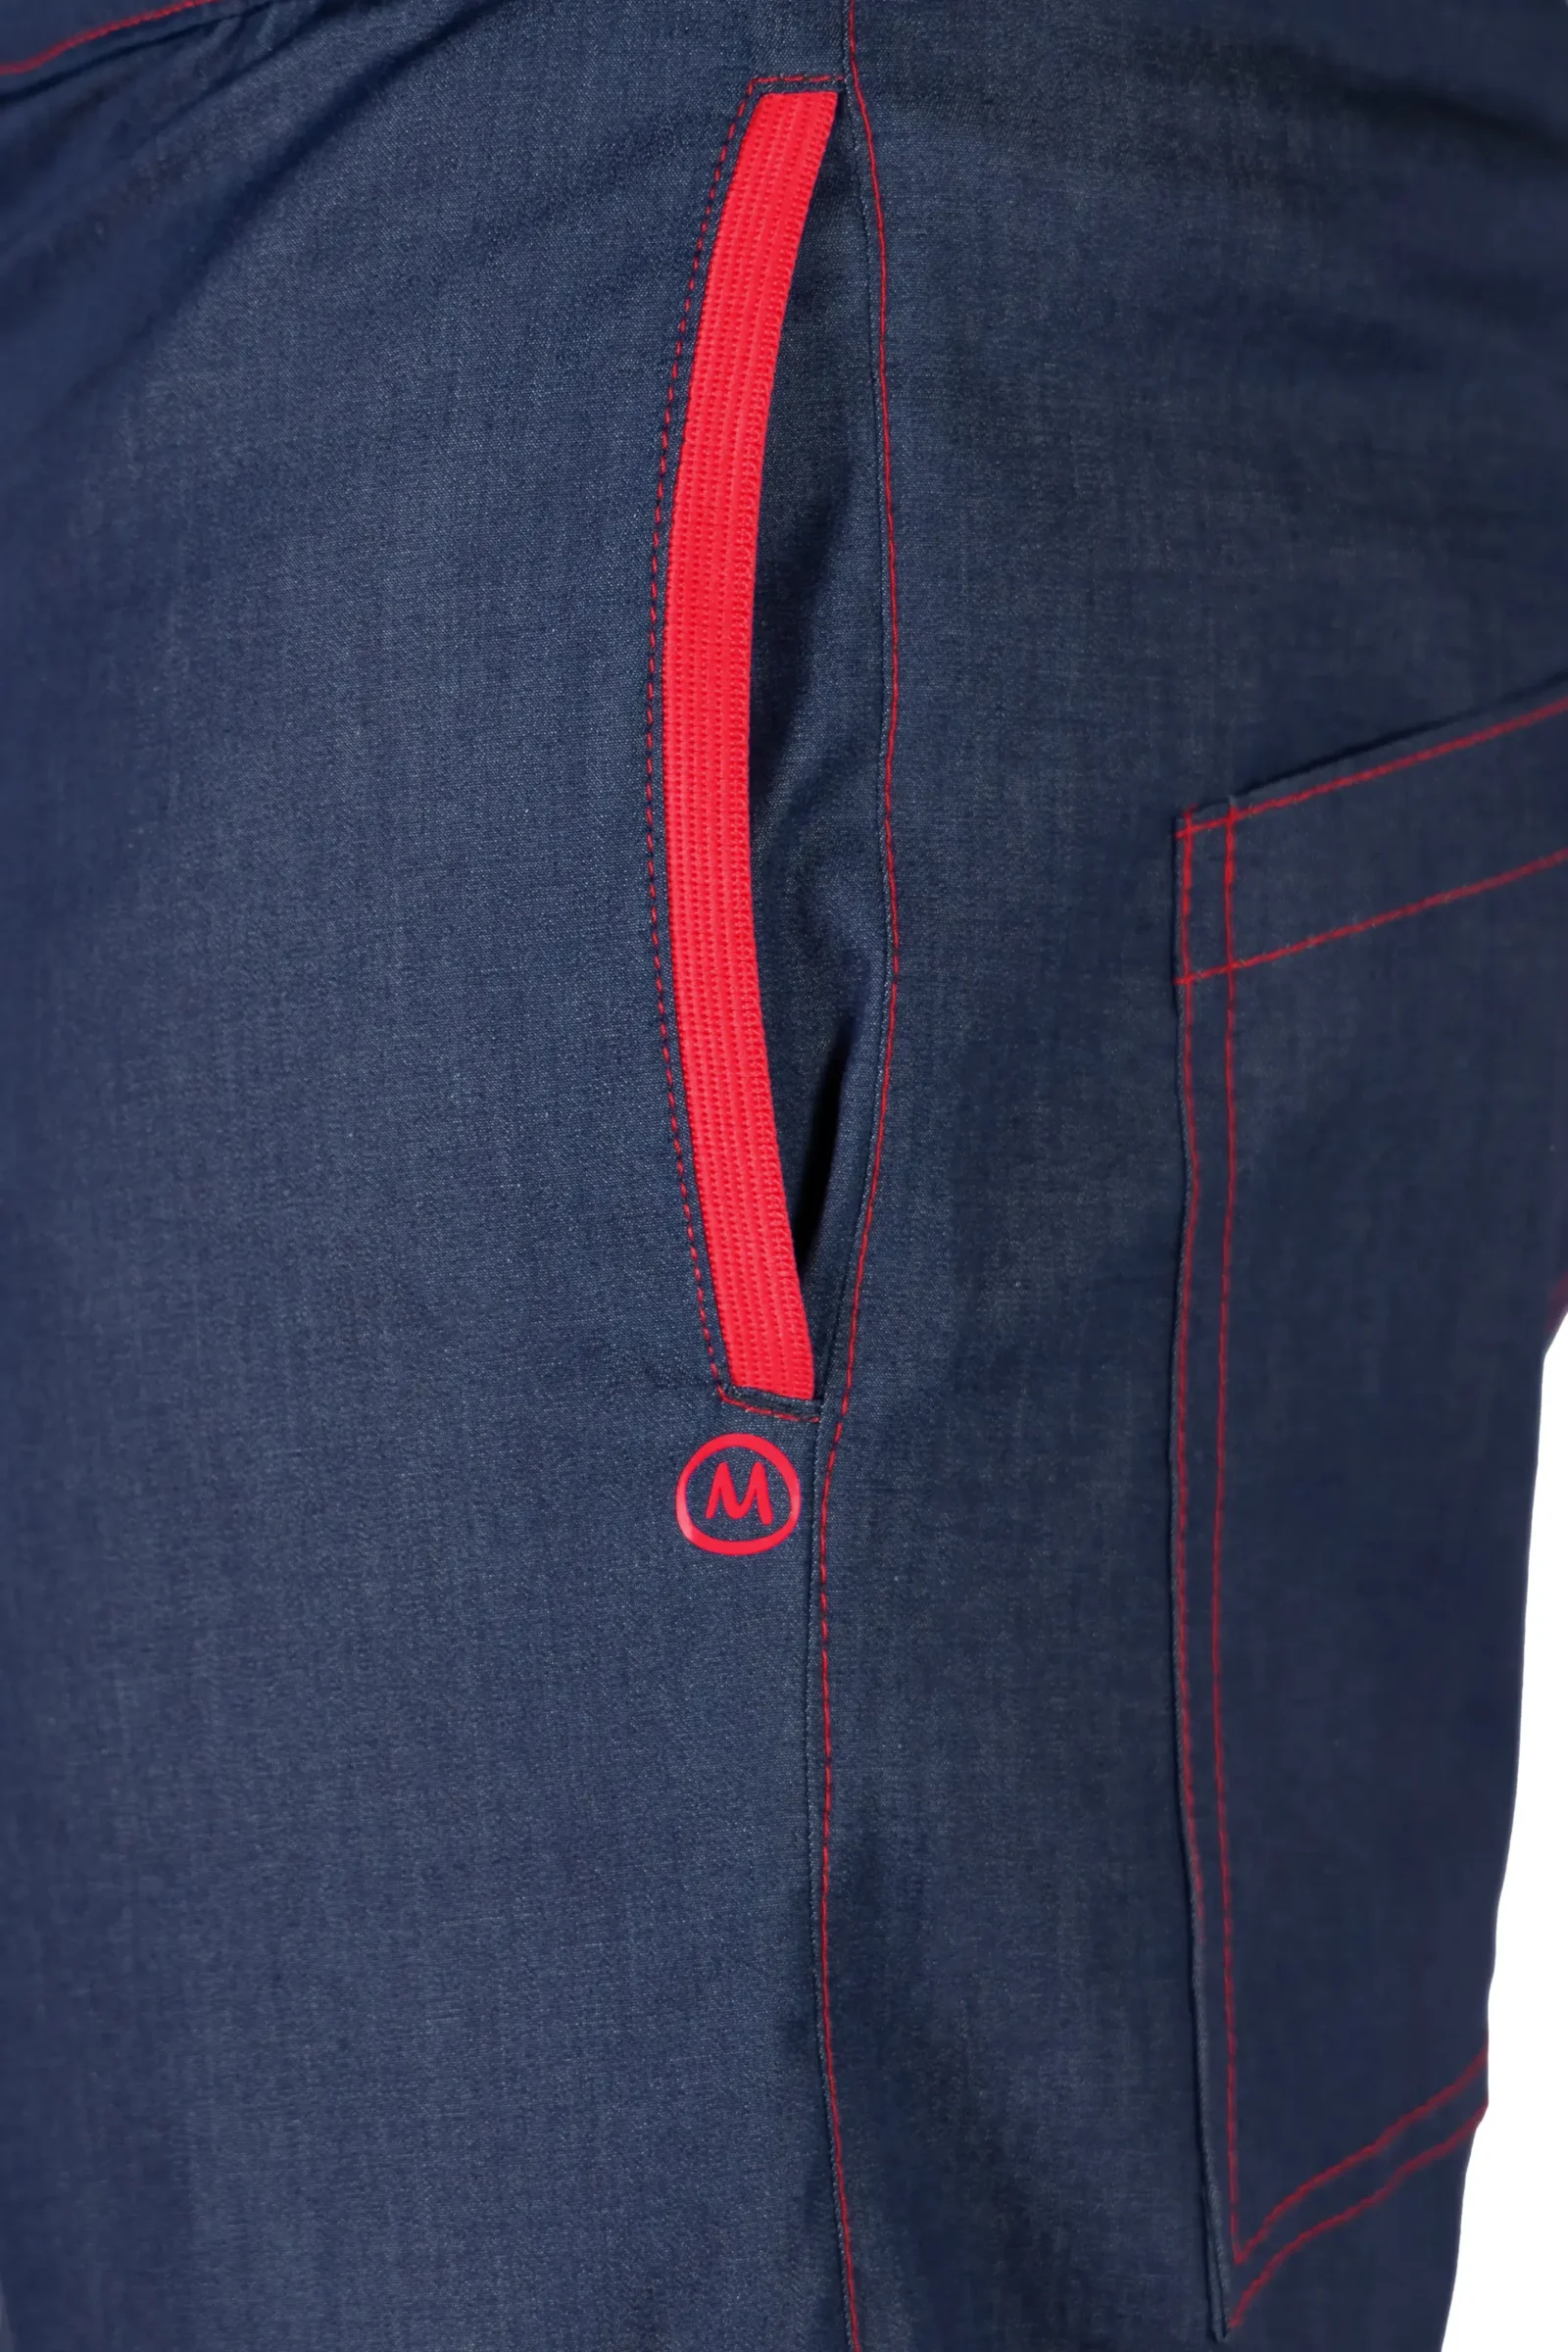 Jeans arrampicata uomo - denim - profilo e cuciture rosse - GERONIMO Monvic